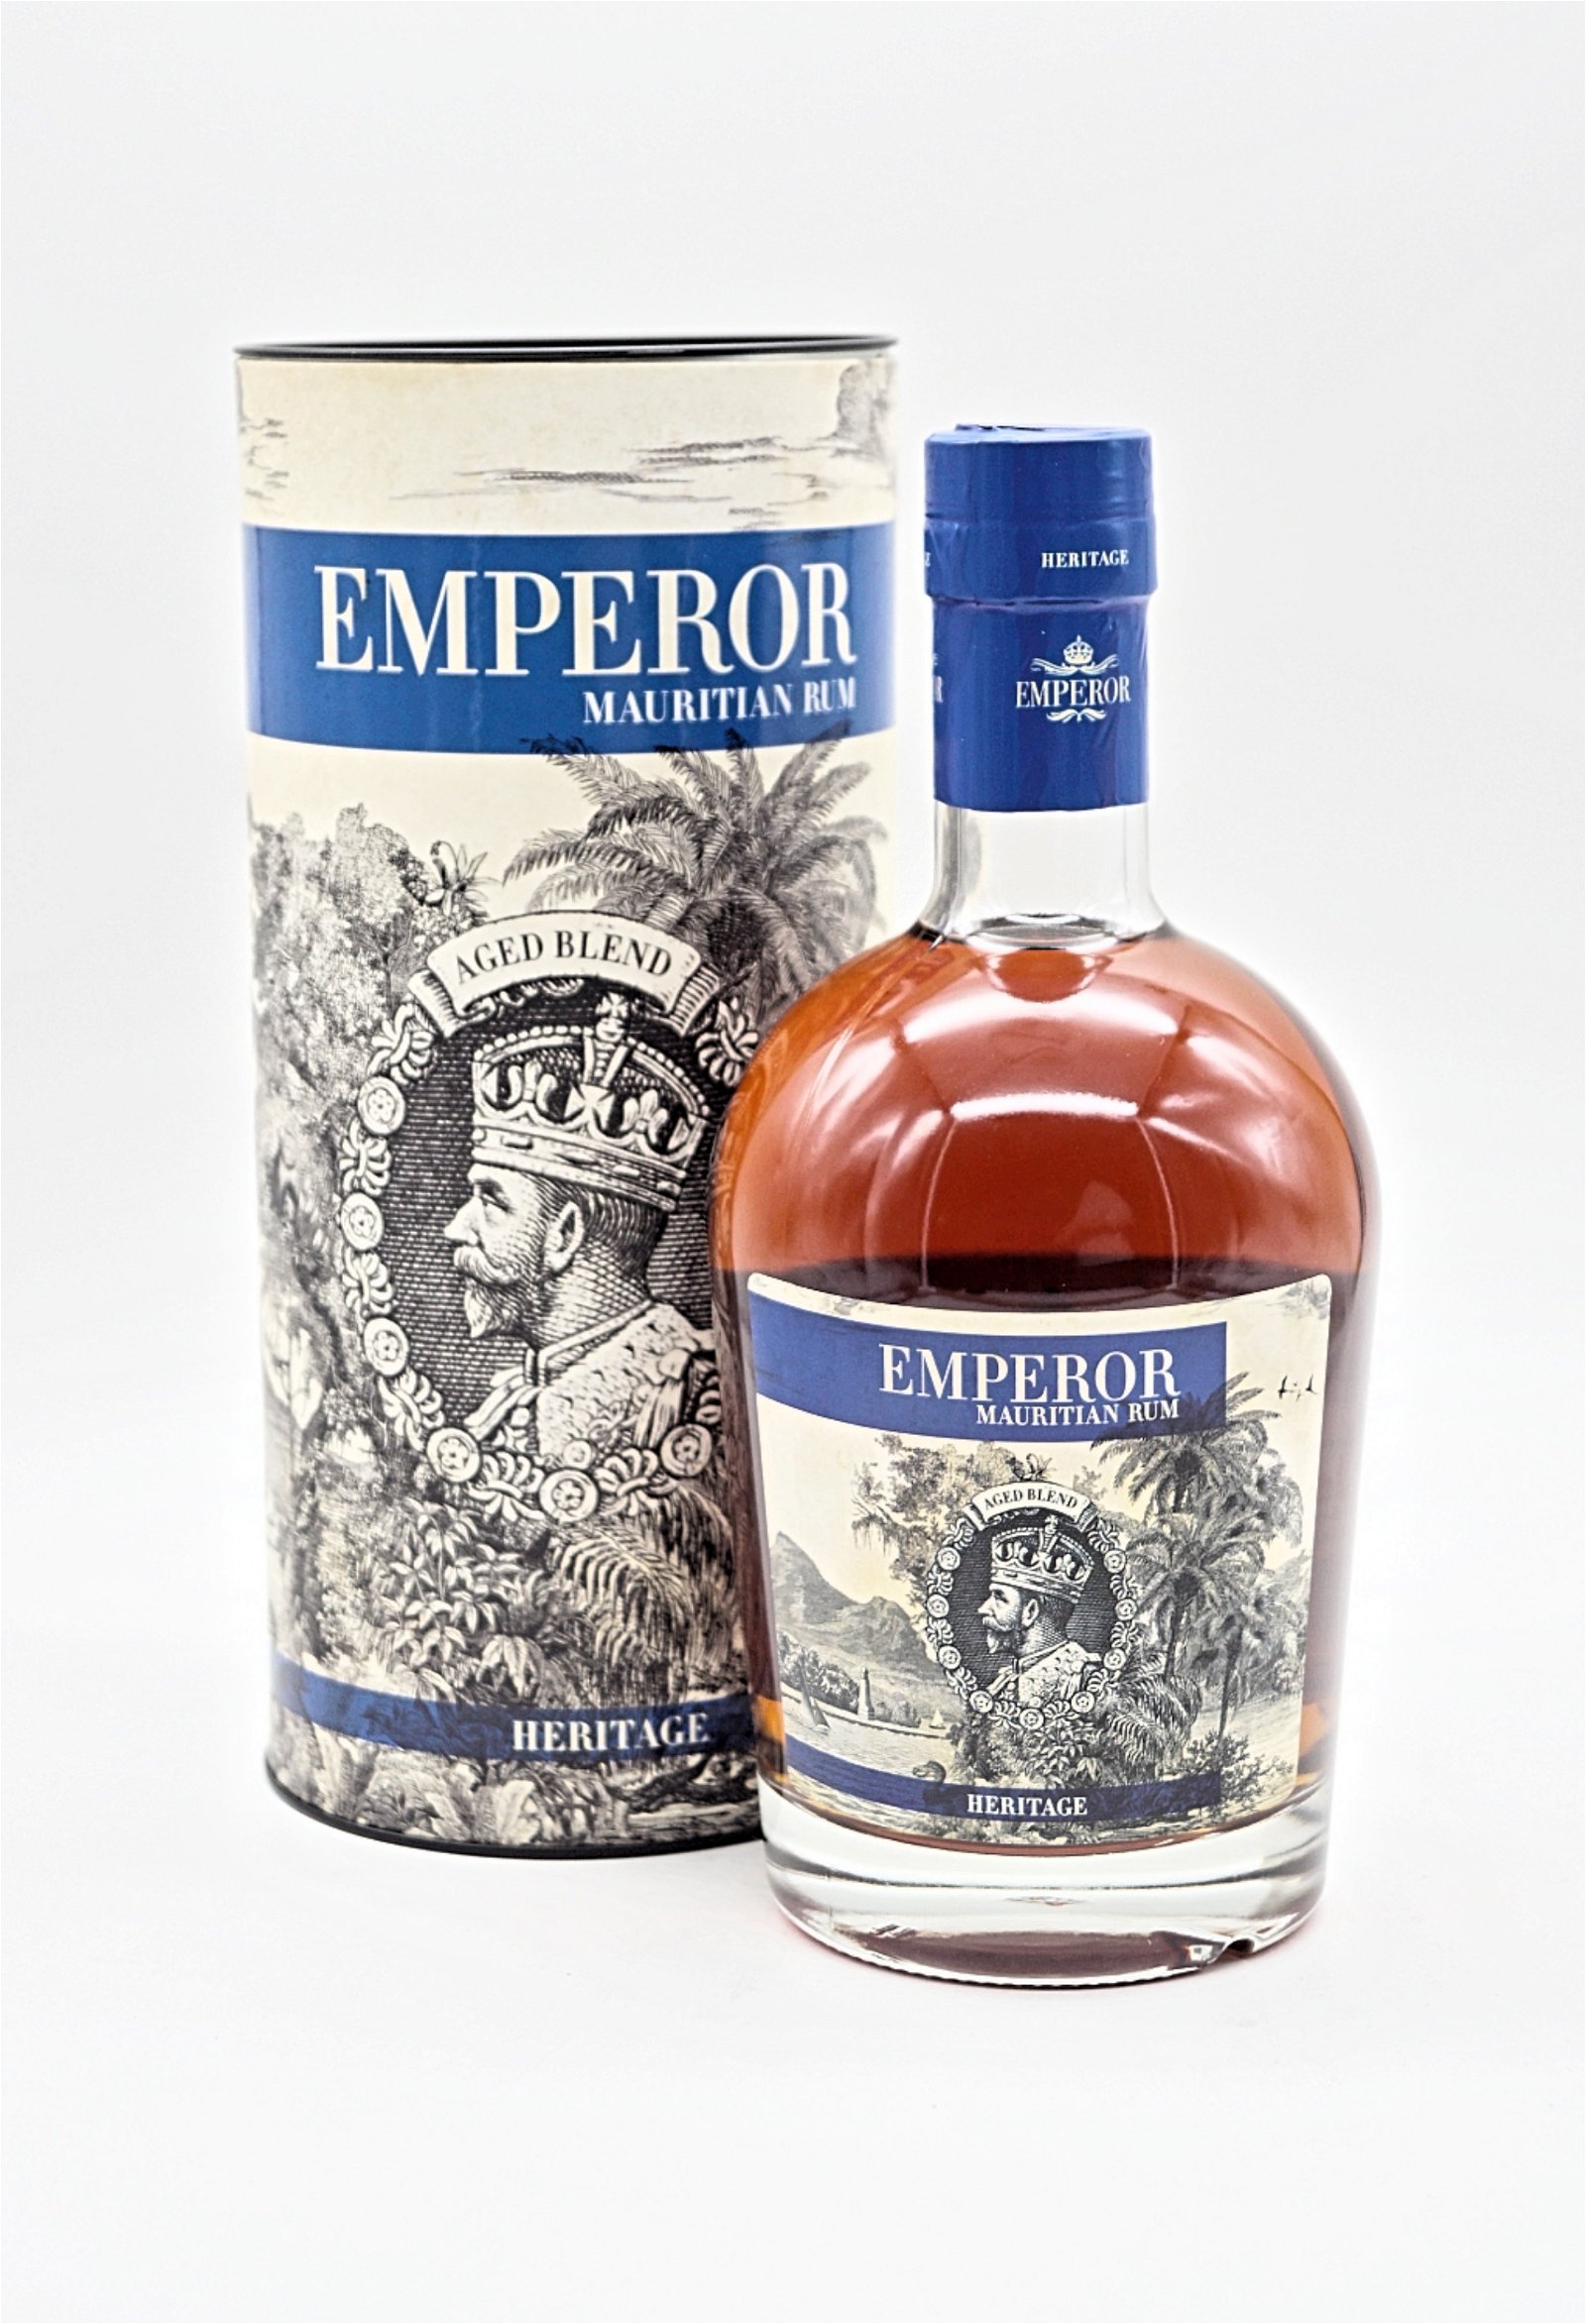 Emperor Heritage Aged Blend Mauritian Rum 